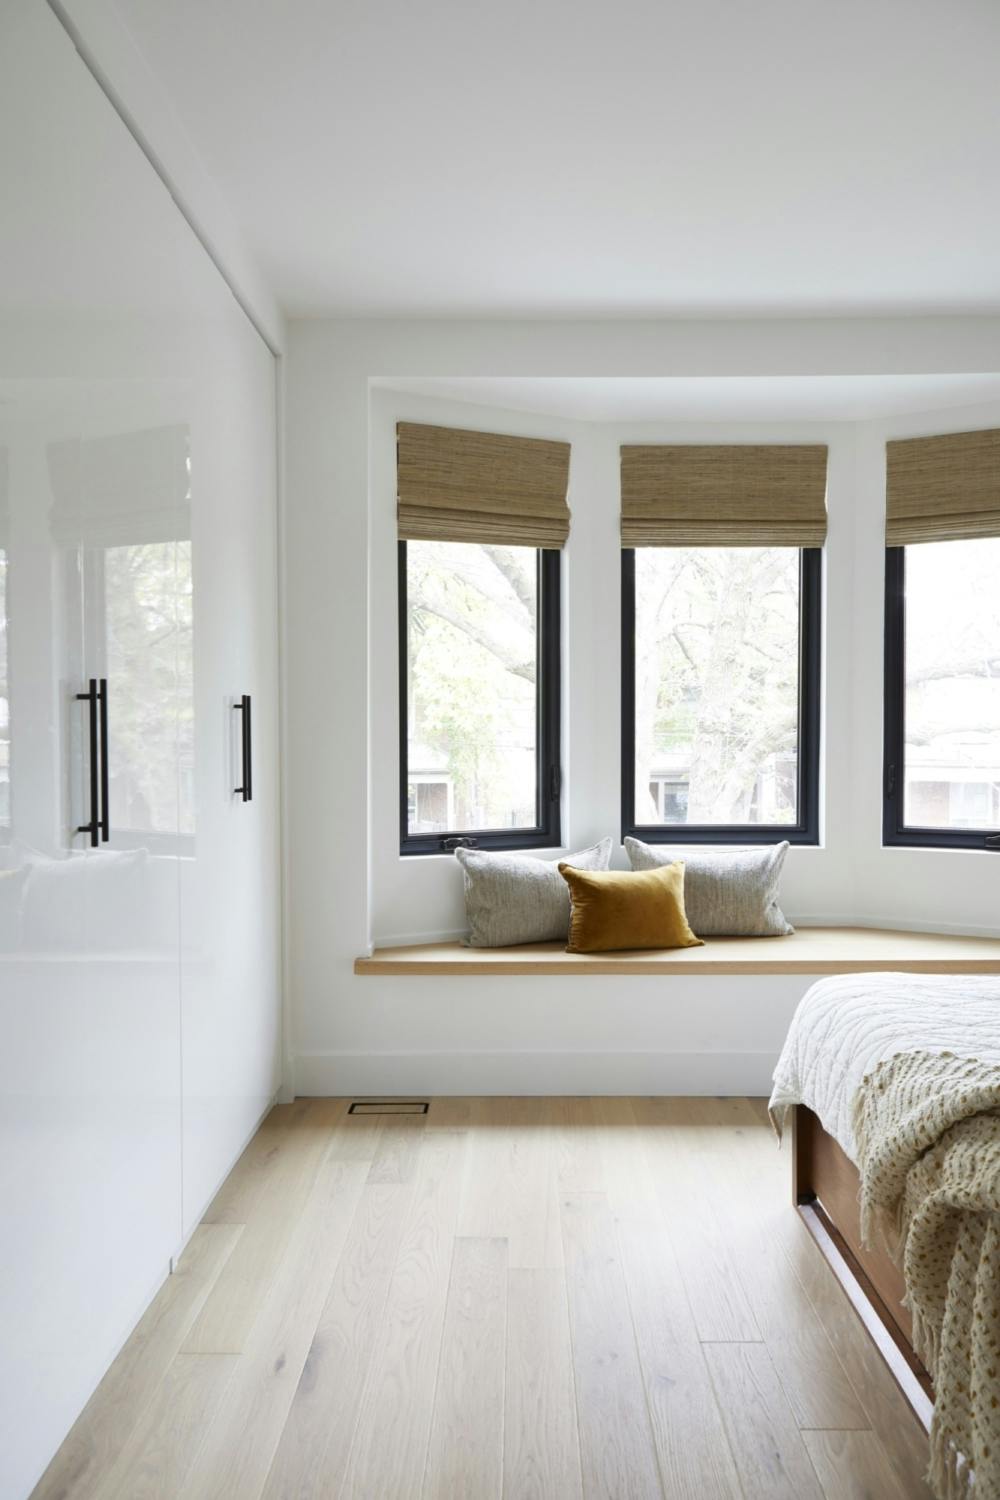 Westminster interior bedroom wardrobe and window details